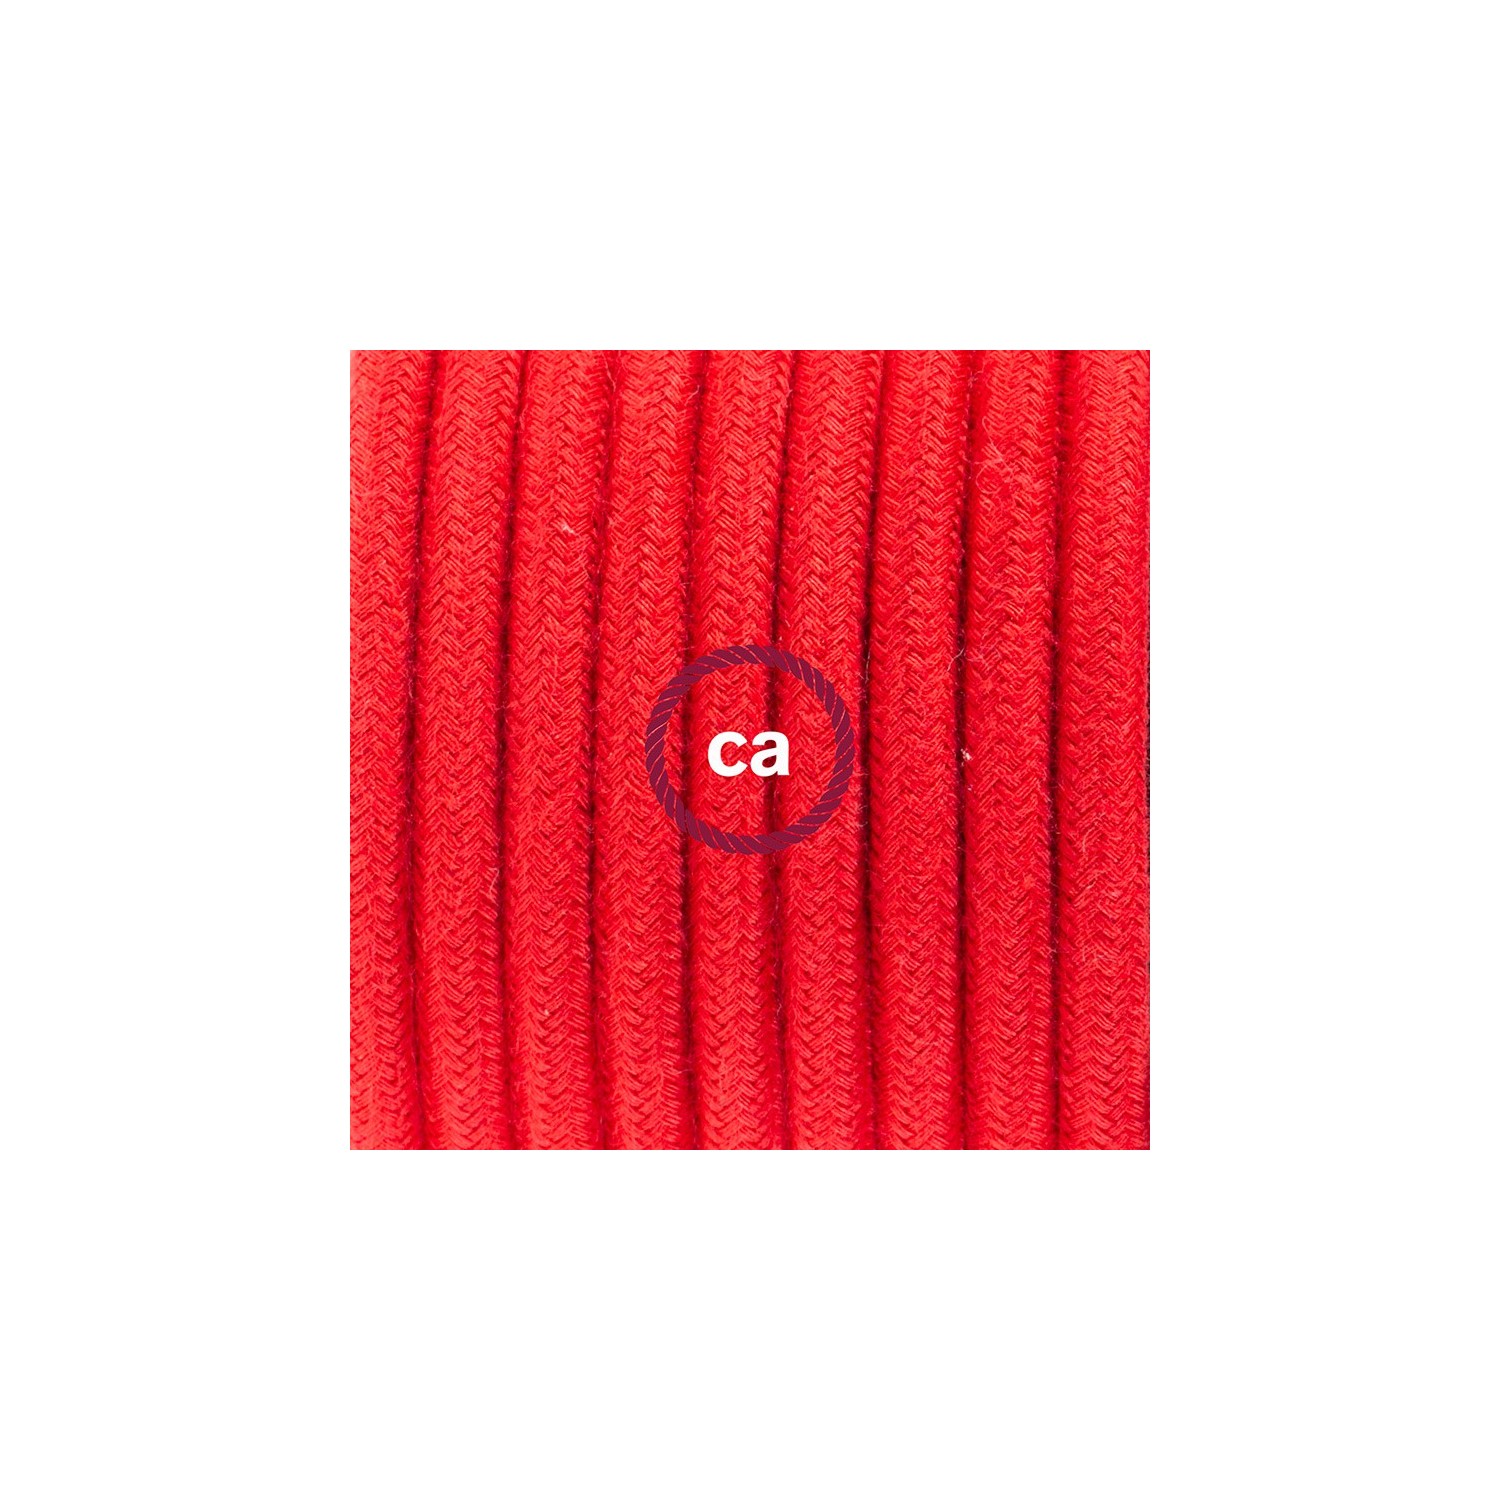 Komplet s talnim stikalom, RC35 ognjeno rdeč bombaž 3 m. Izberite barvo vtikača in stikala.